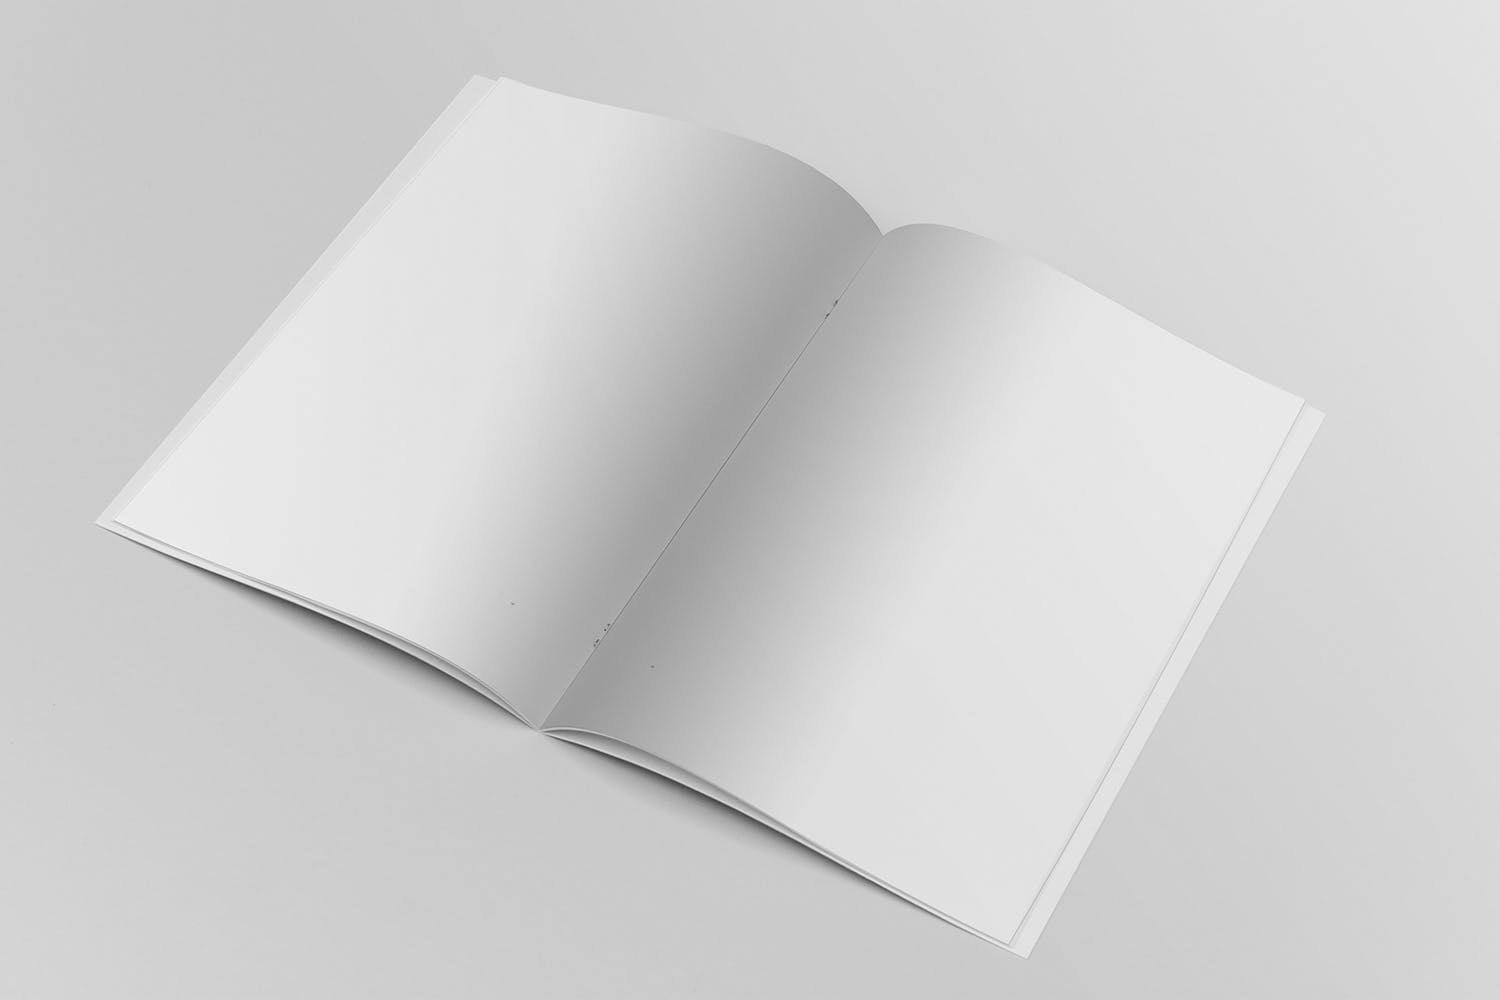 A4宣传小册子/企业画册内页排版设计效果图样机普贤居精选 A4 Brochure Mockup Open Pages插图(1)